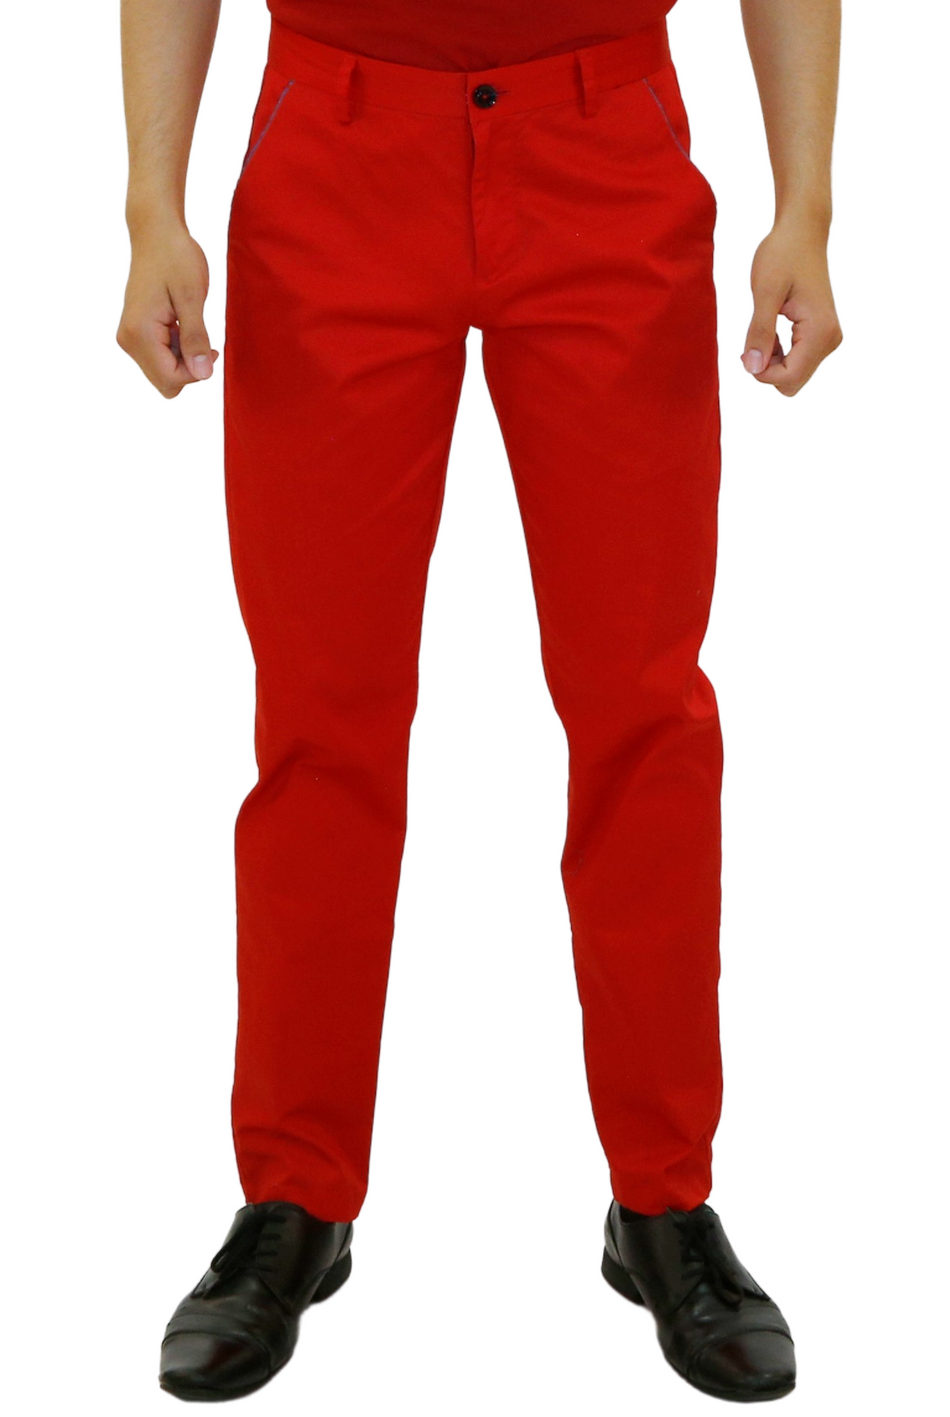 BESPOKE - Red Pants for Men - 183122 - www.– BESPOKE MODA